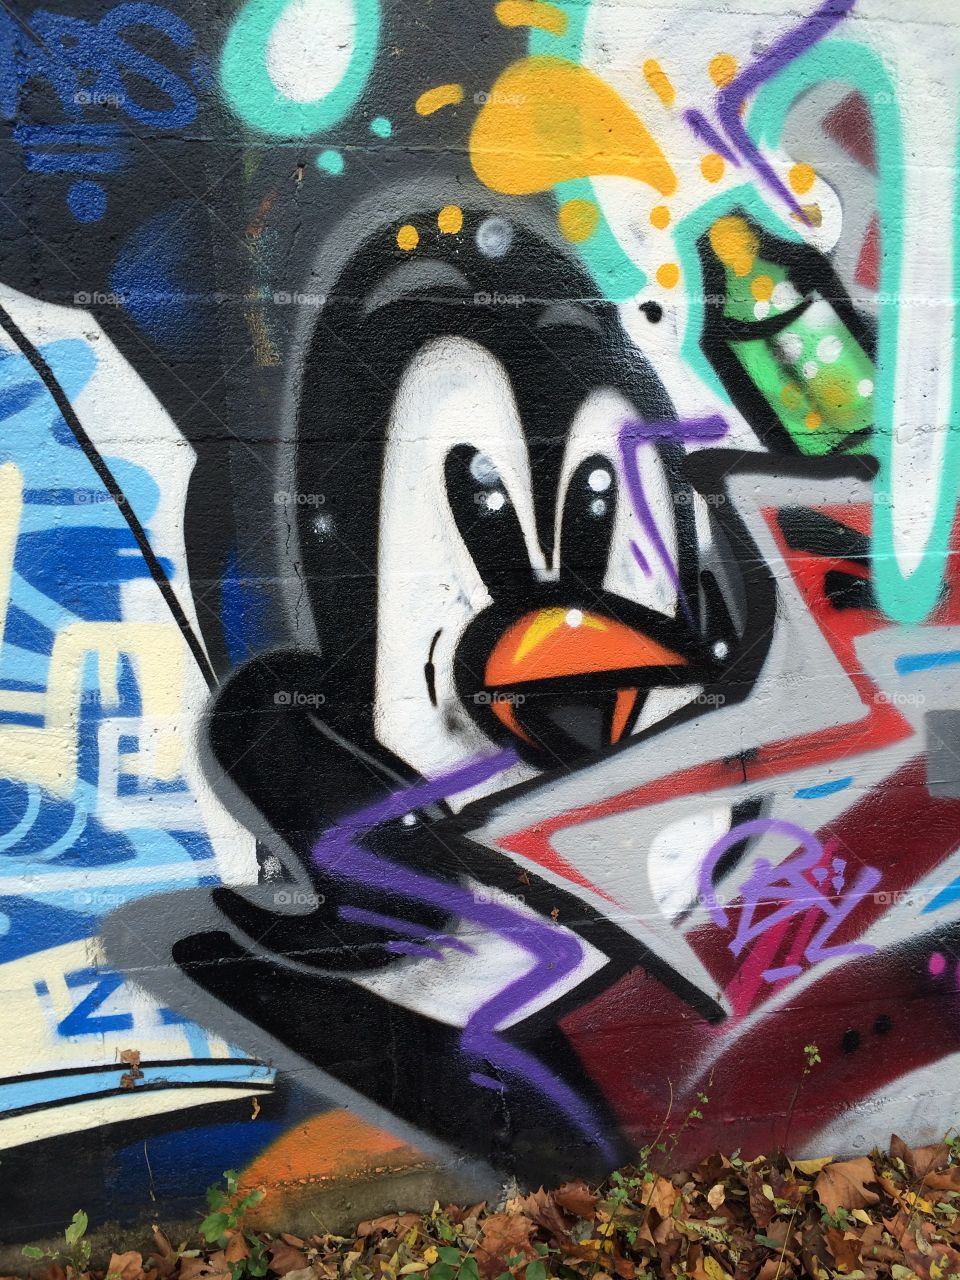 Penguin street art graffiti 